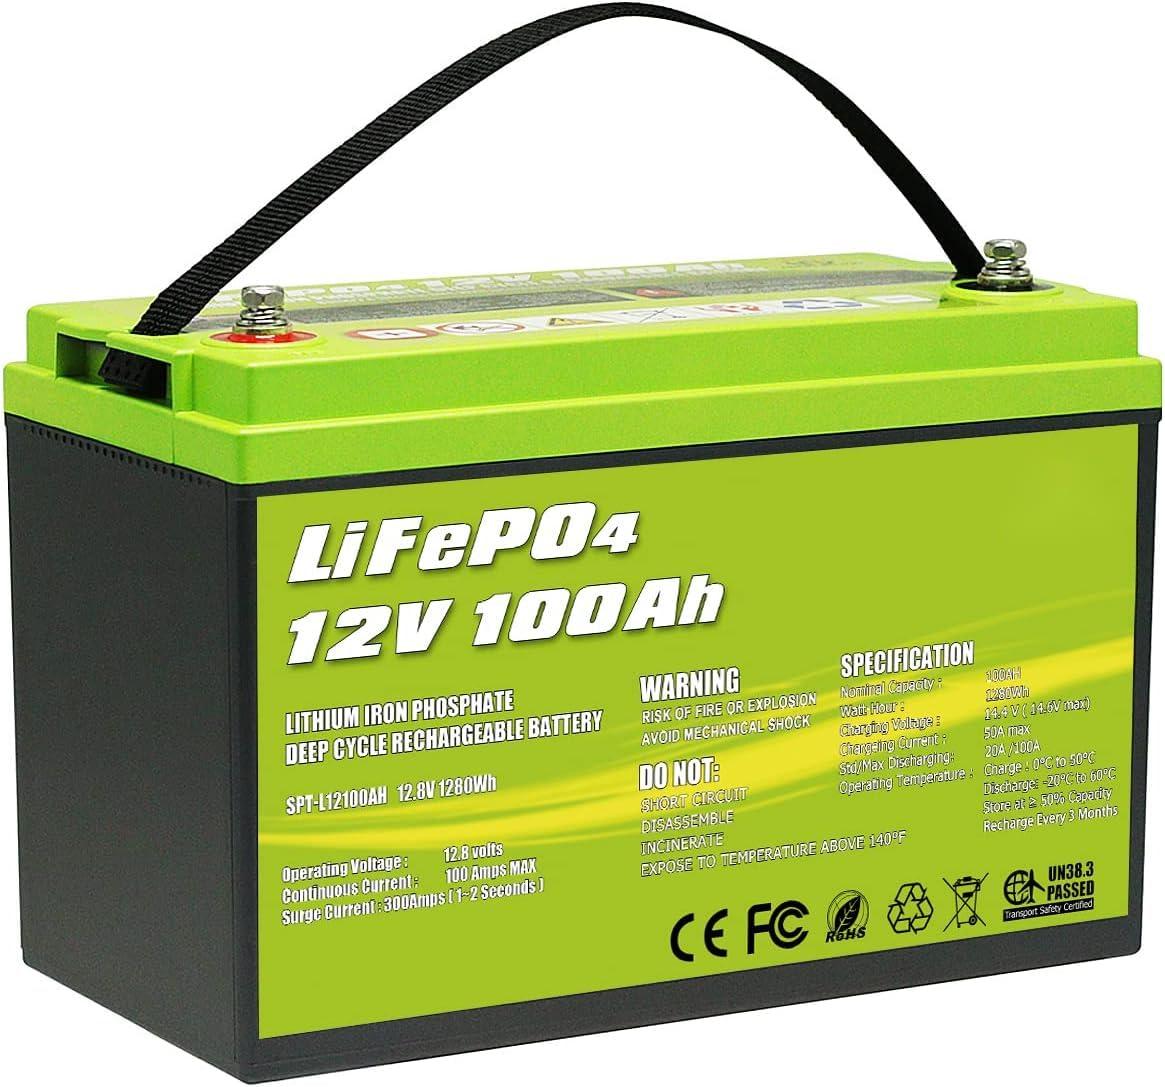 Batterie lithium 12V 100A.h